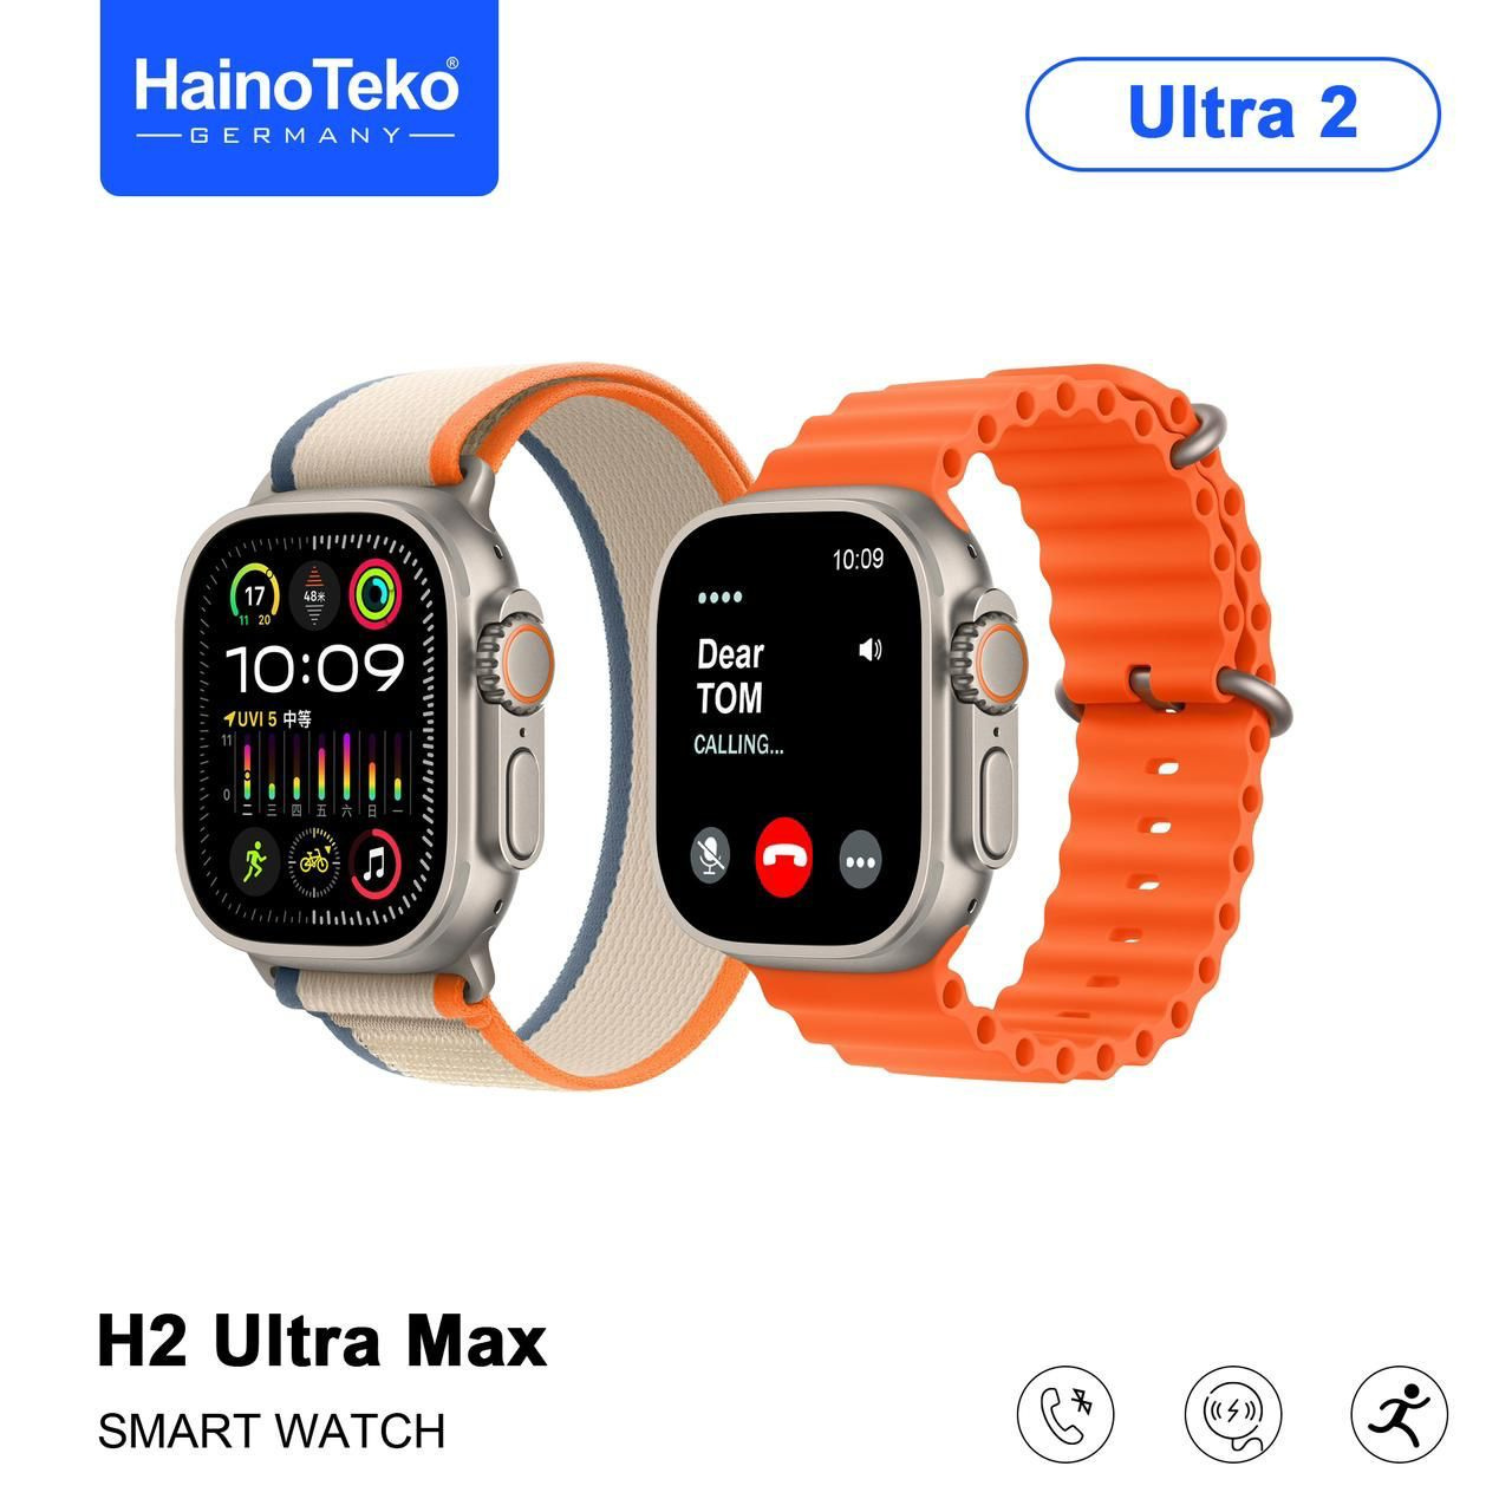 HAINO TEKO Germany H2 ULTRA MAX Smart Watch - Premium AMOLED Display, Advanced Fitness Tracker, Health Monitor, Water Resistant